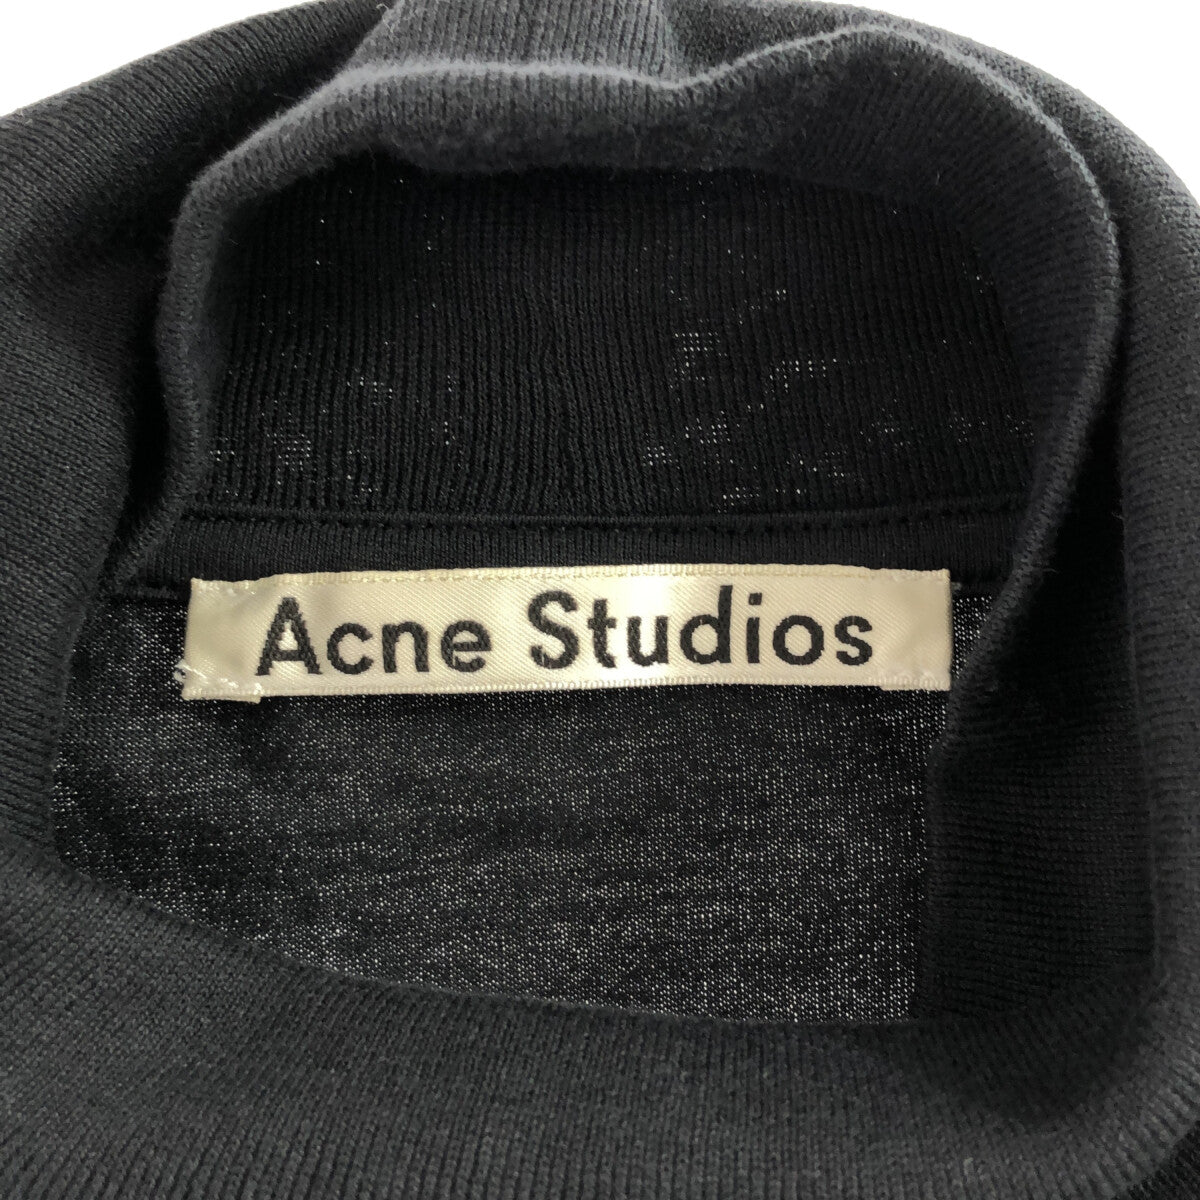 Acne Studios / アクネストゥディオズ | 2020SS | モックネックTシャツ | XS |